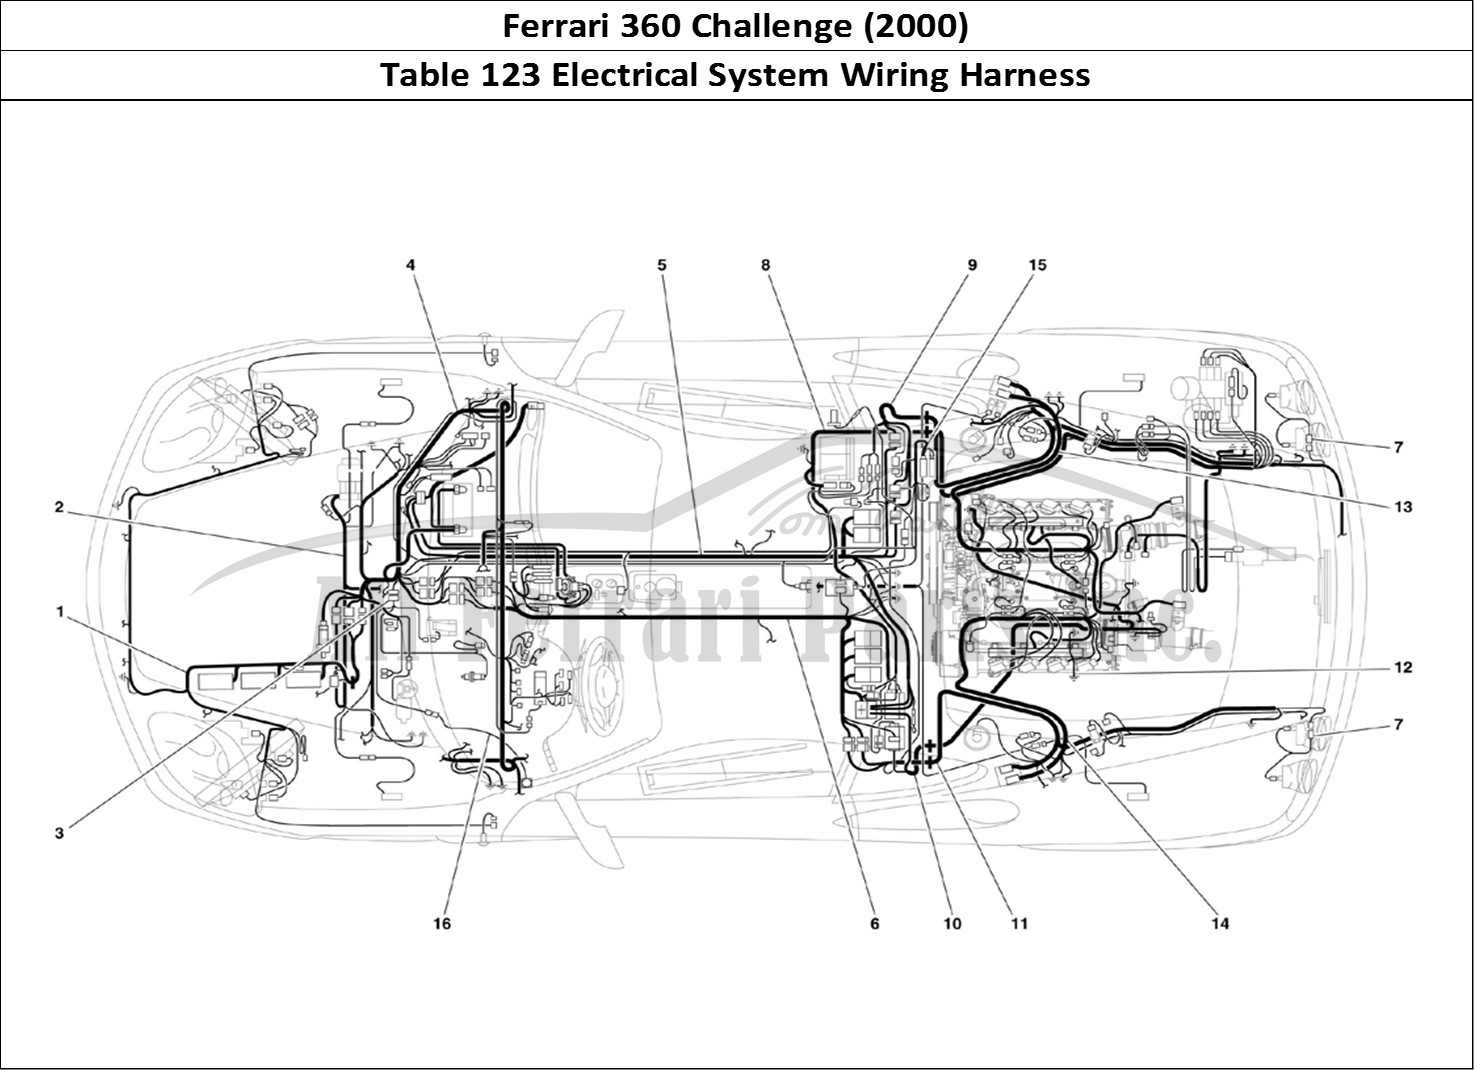 Ferrari Parts Ferrari 360 Challenge (2000) Page 123 Electrical System